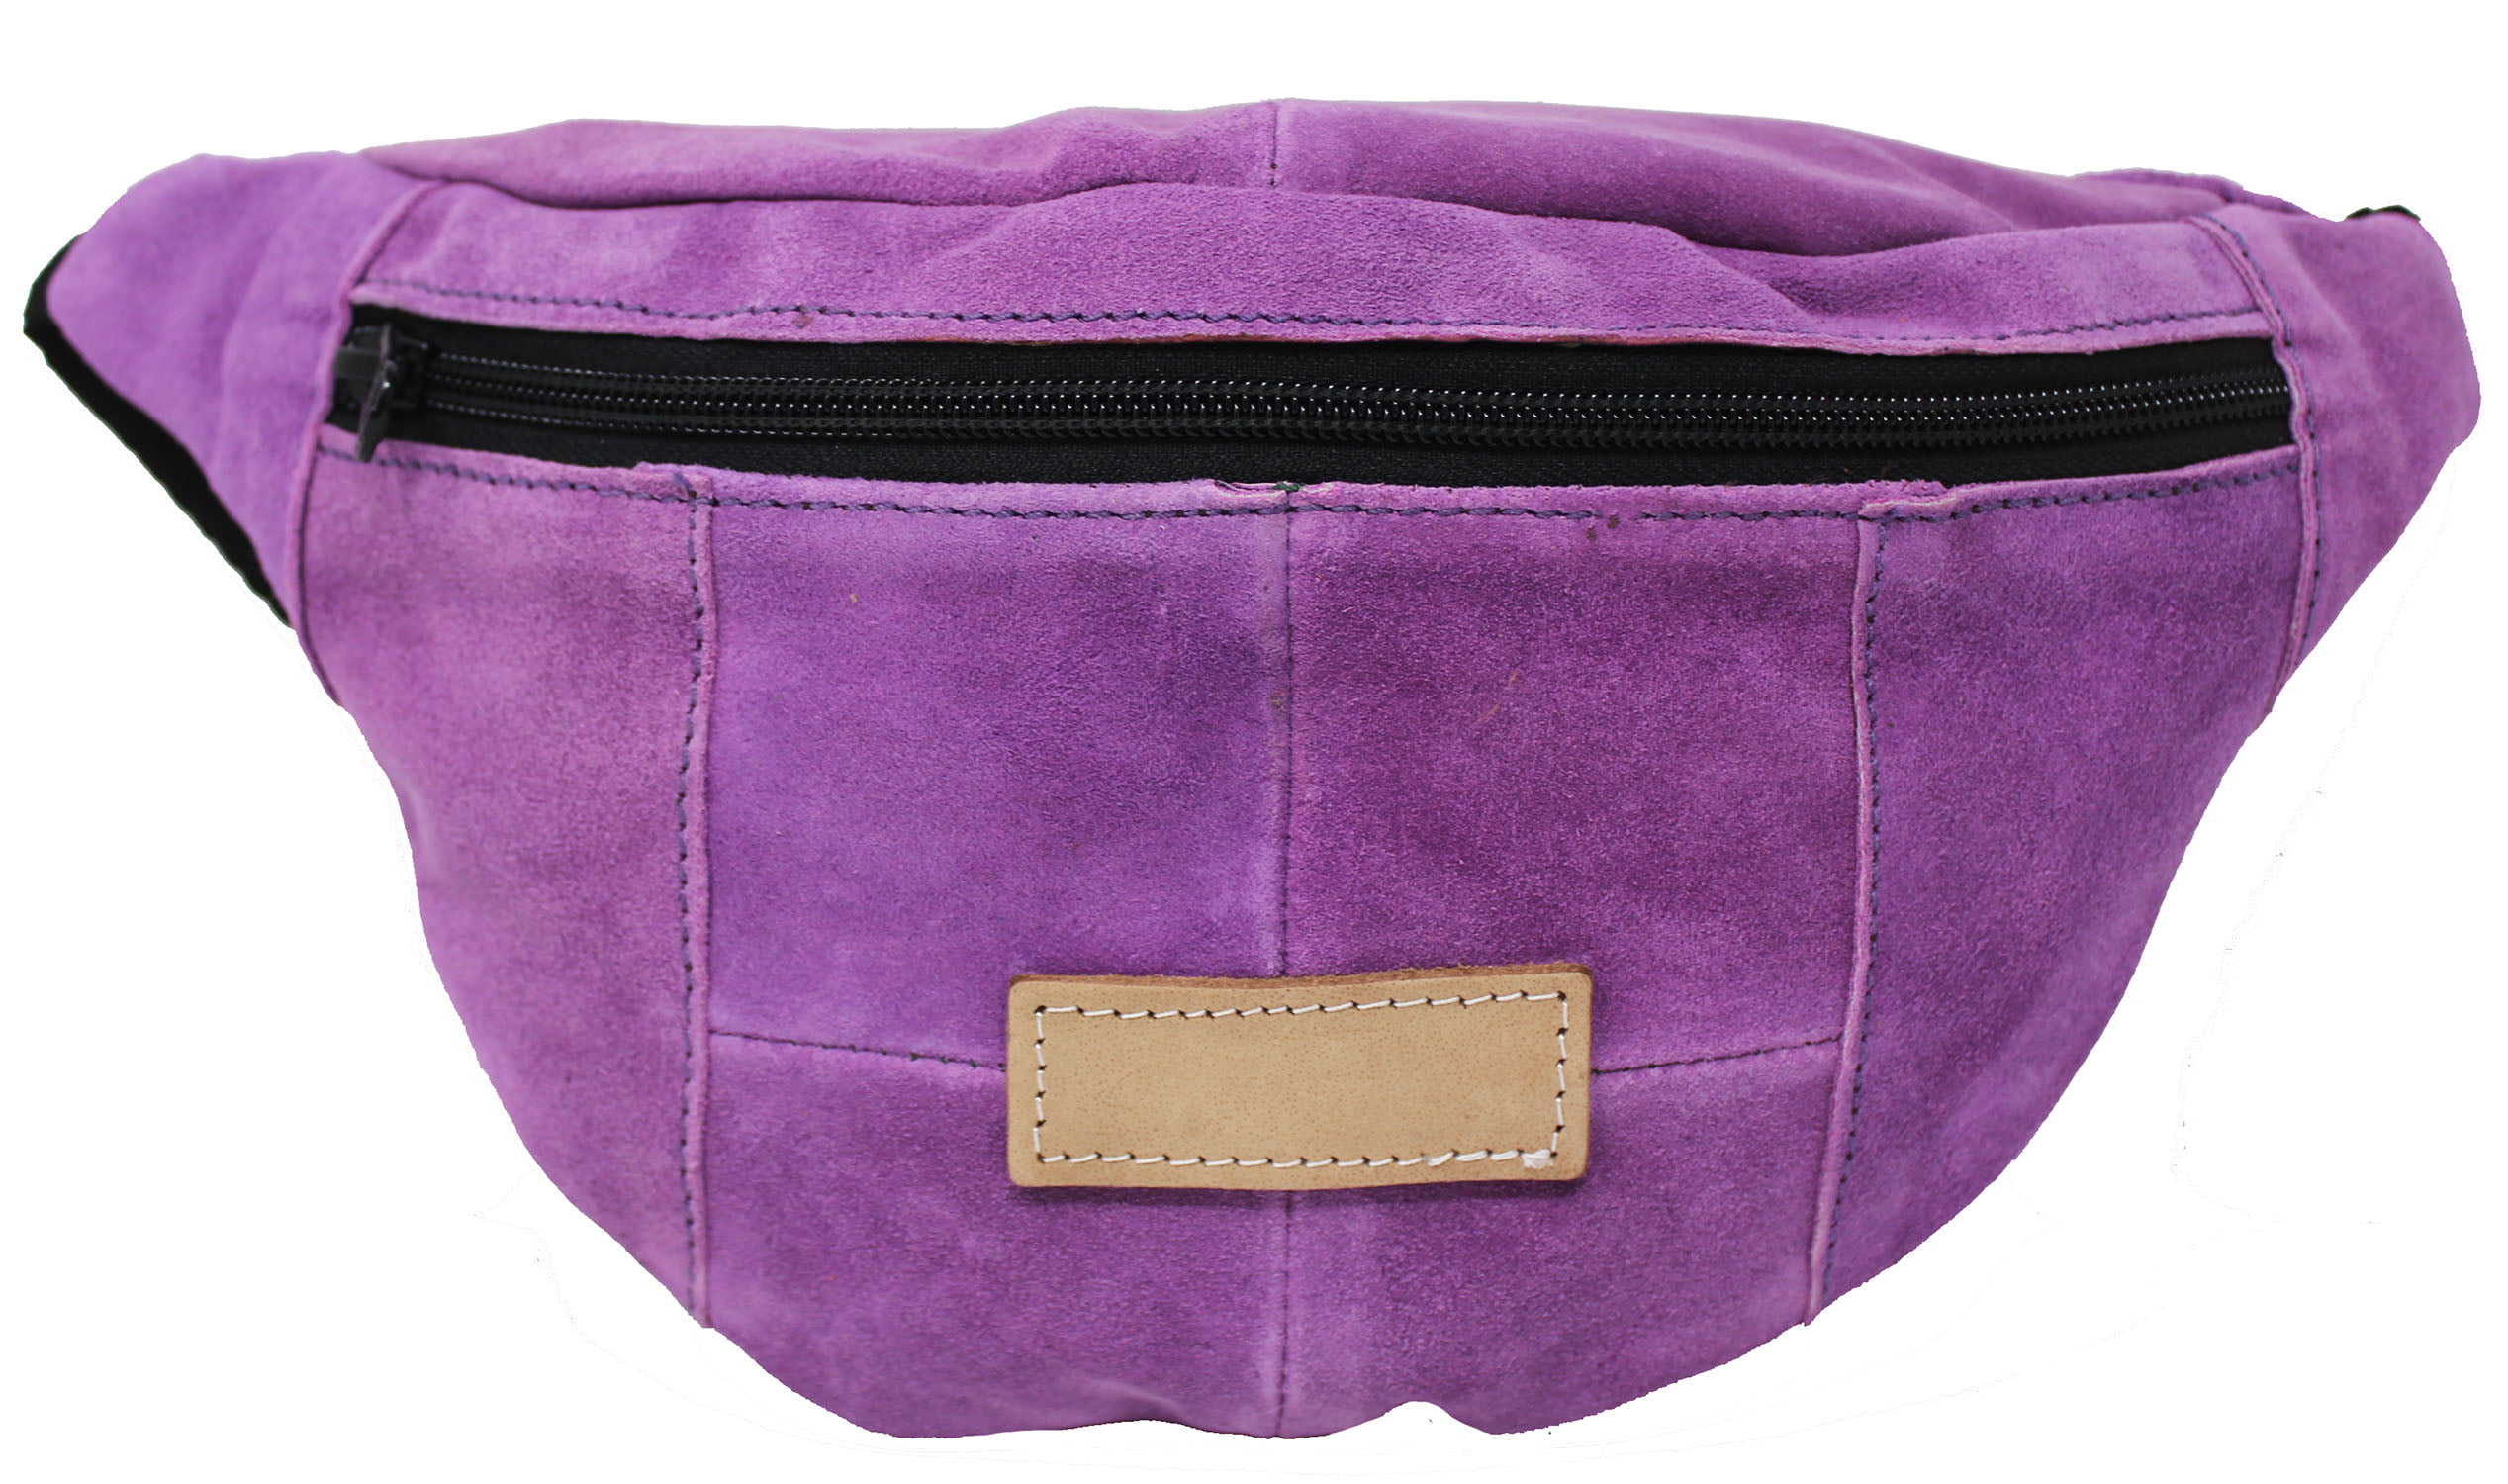 Leather Belt Bag Hip Purse Embroidered purple Rose - SUNSET LEATHER